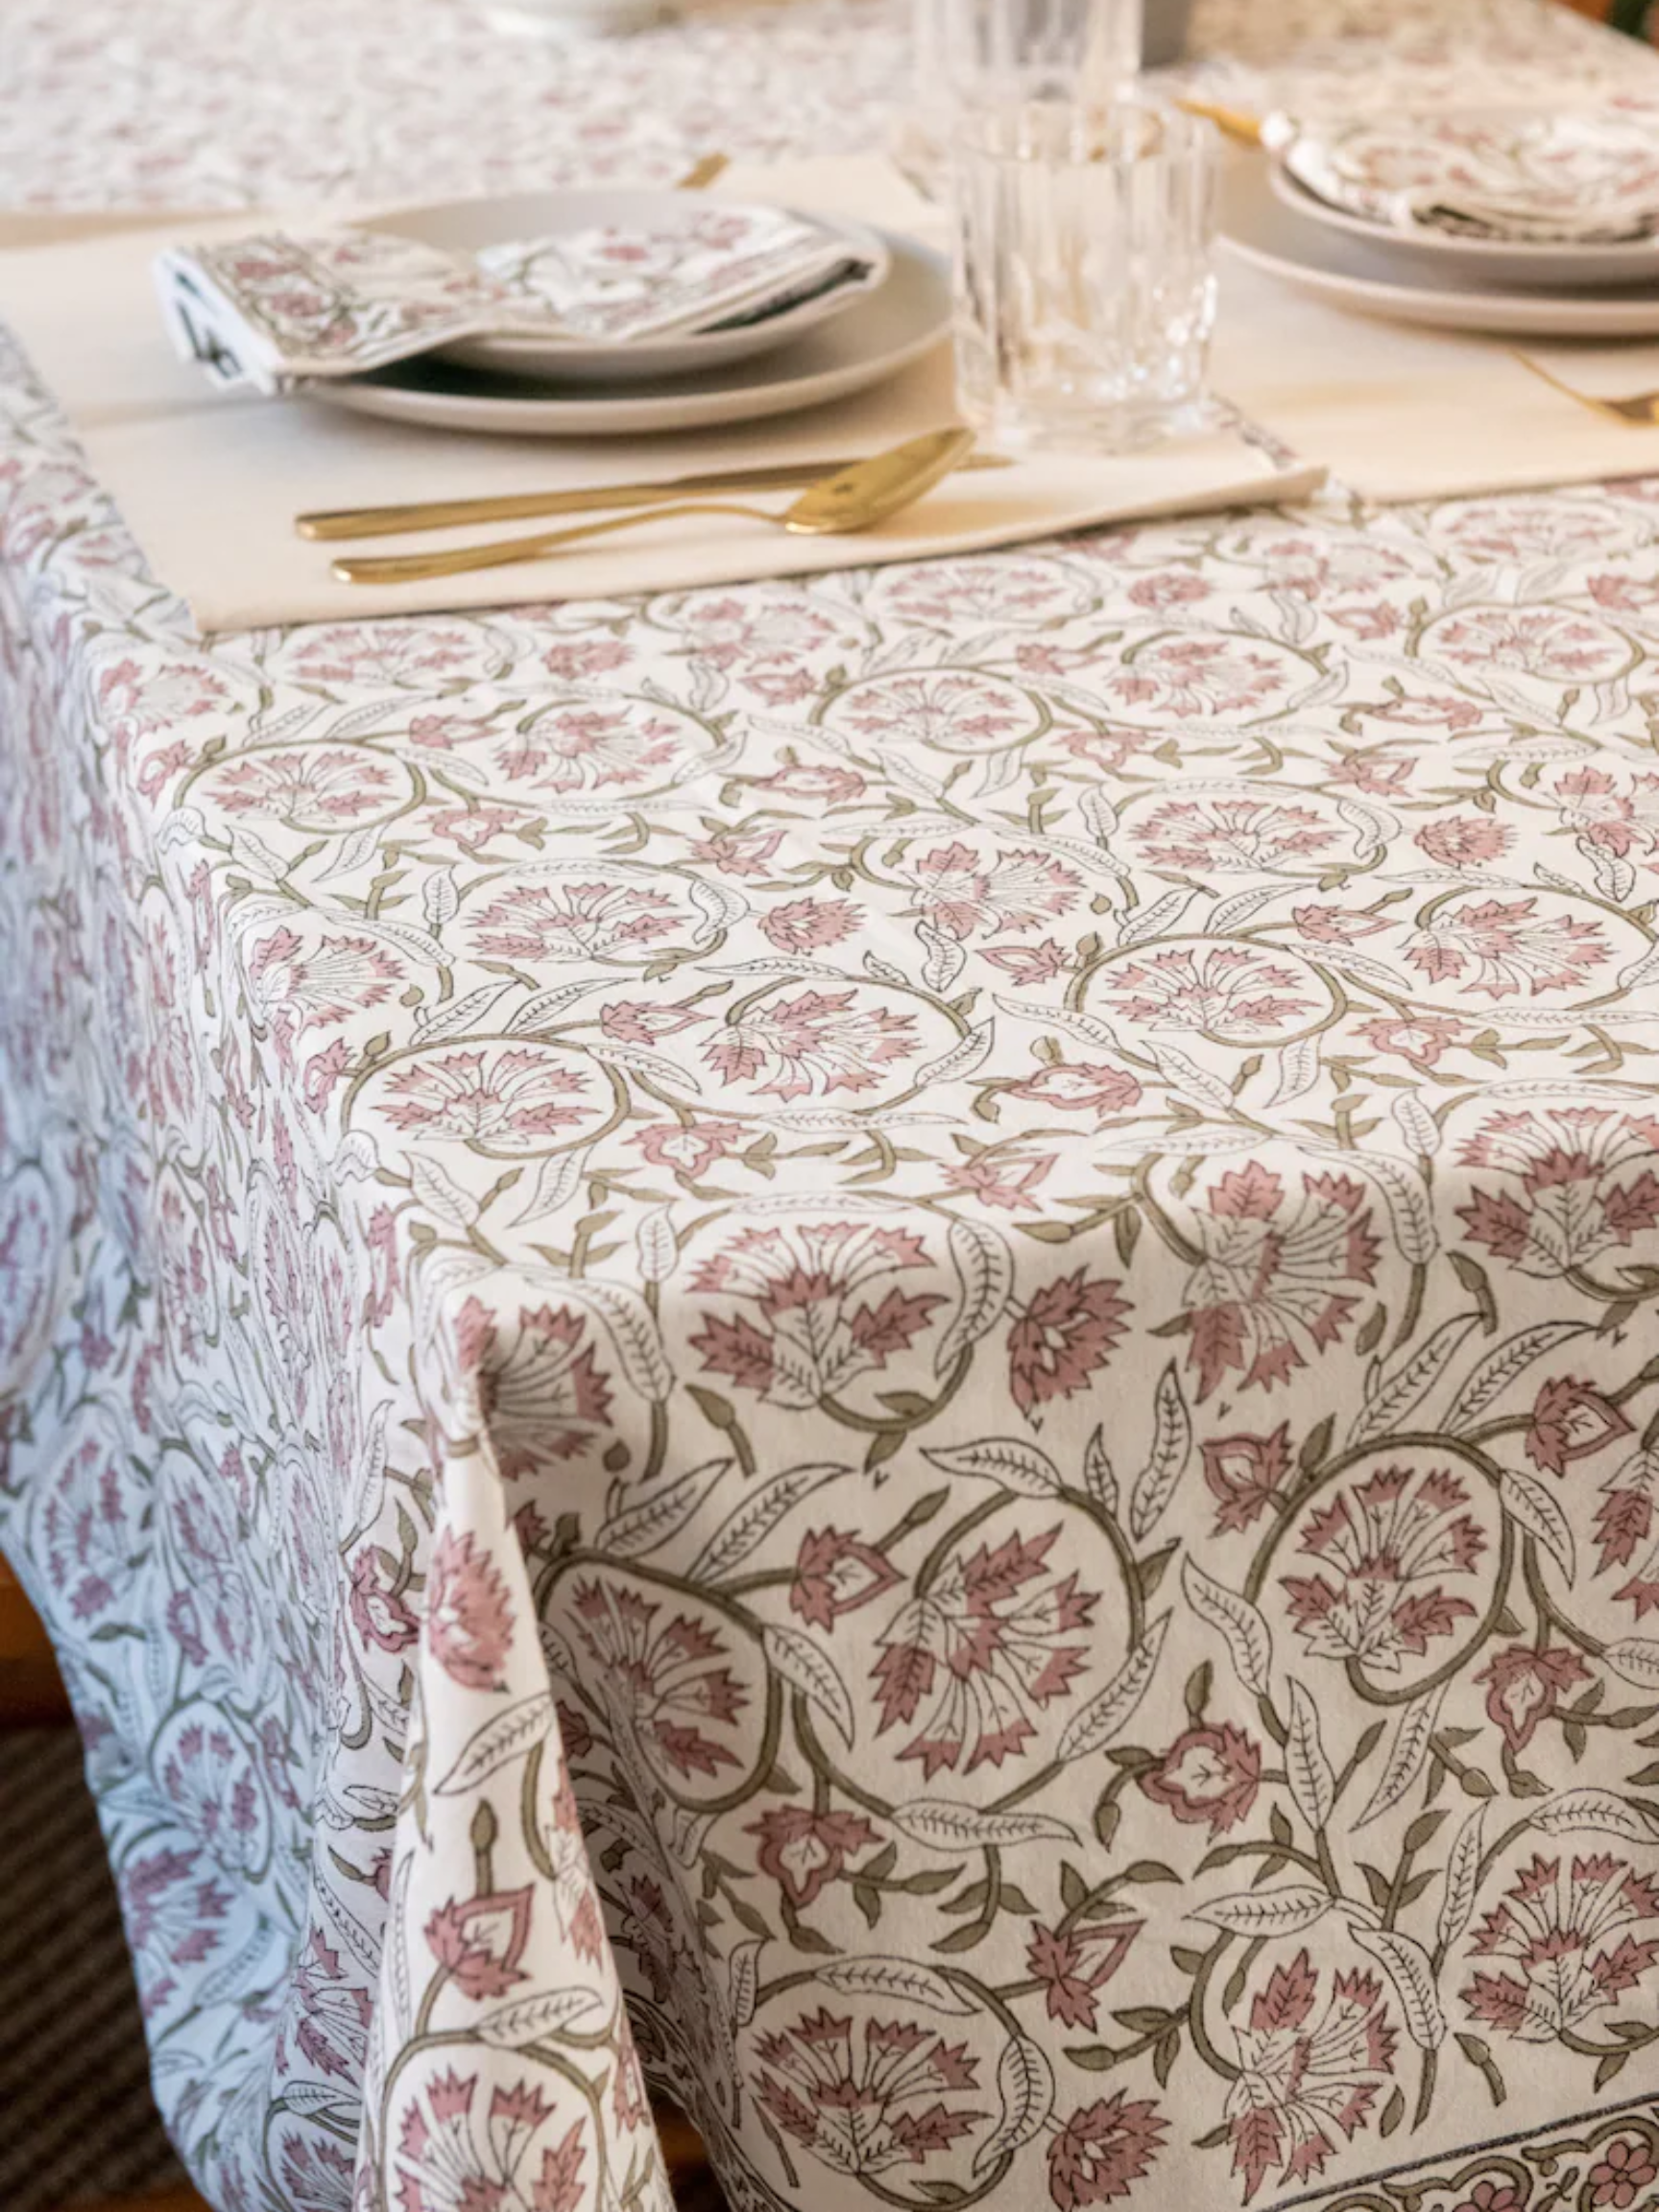 Indian Block Print Tablecloth